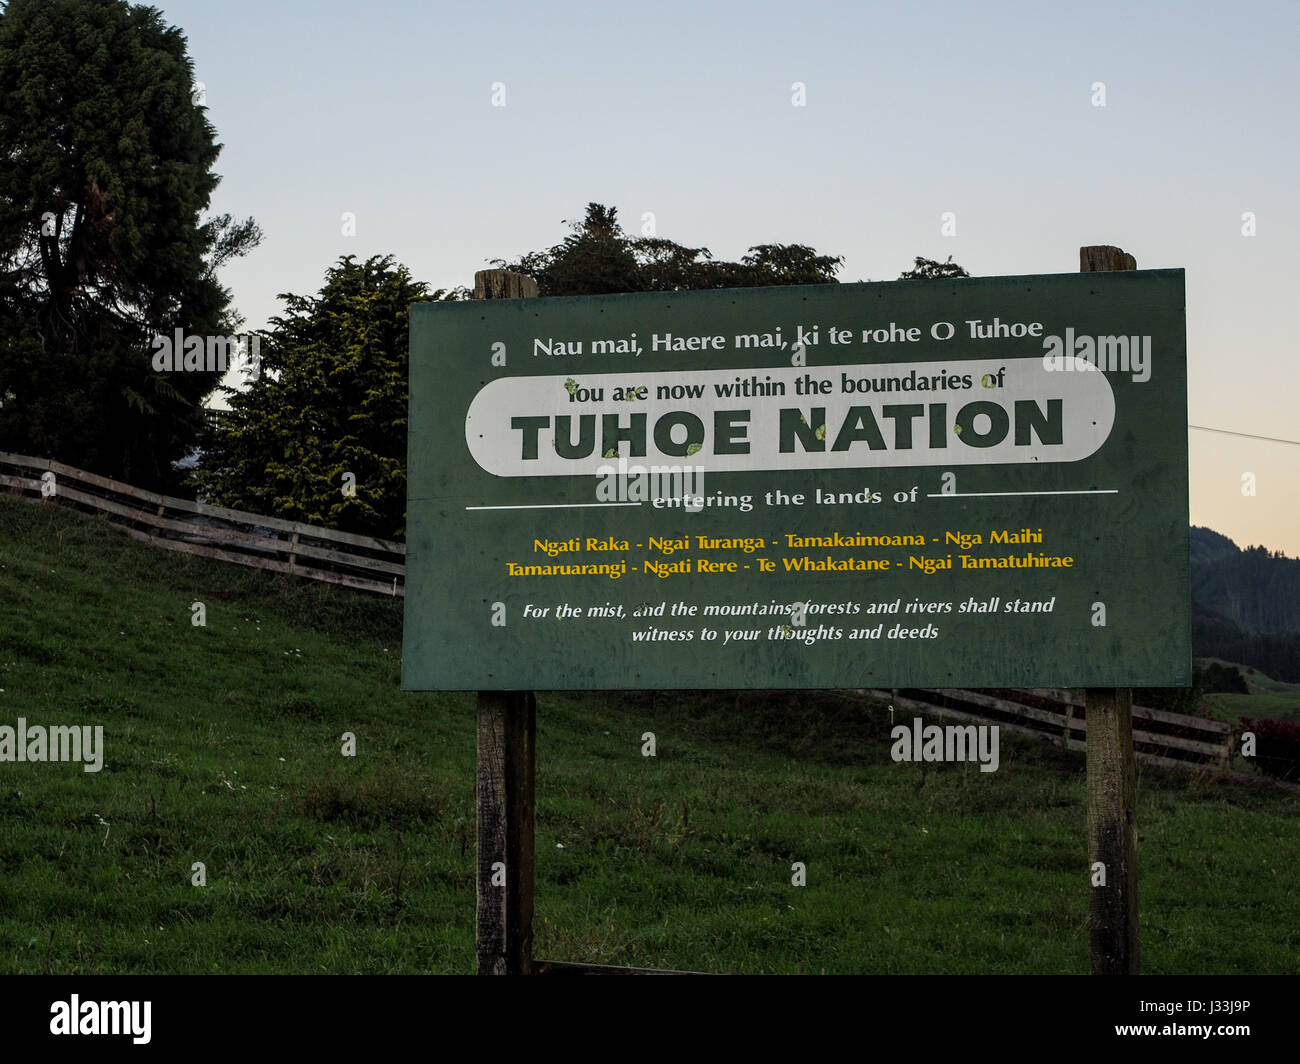 Tuhoe Nation sign, Matahi Vallet Road, Whakatane Distict, Te Urewera, New Zealand, Tuhoe Nation Stock Photo